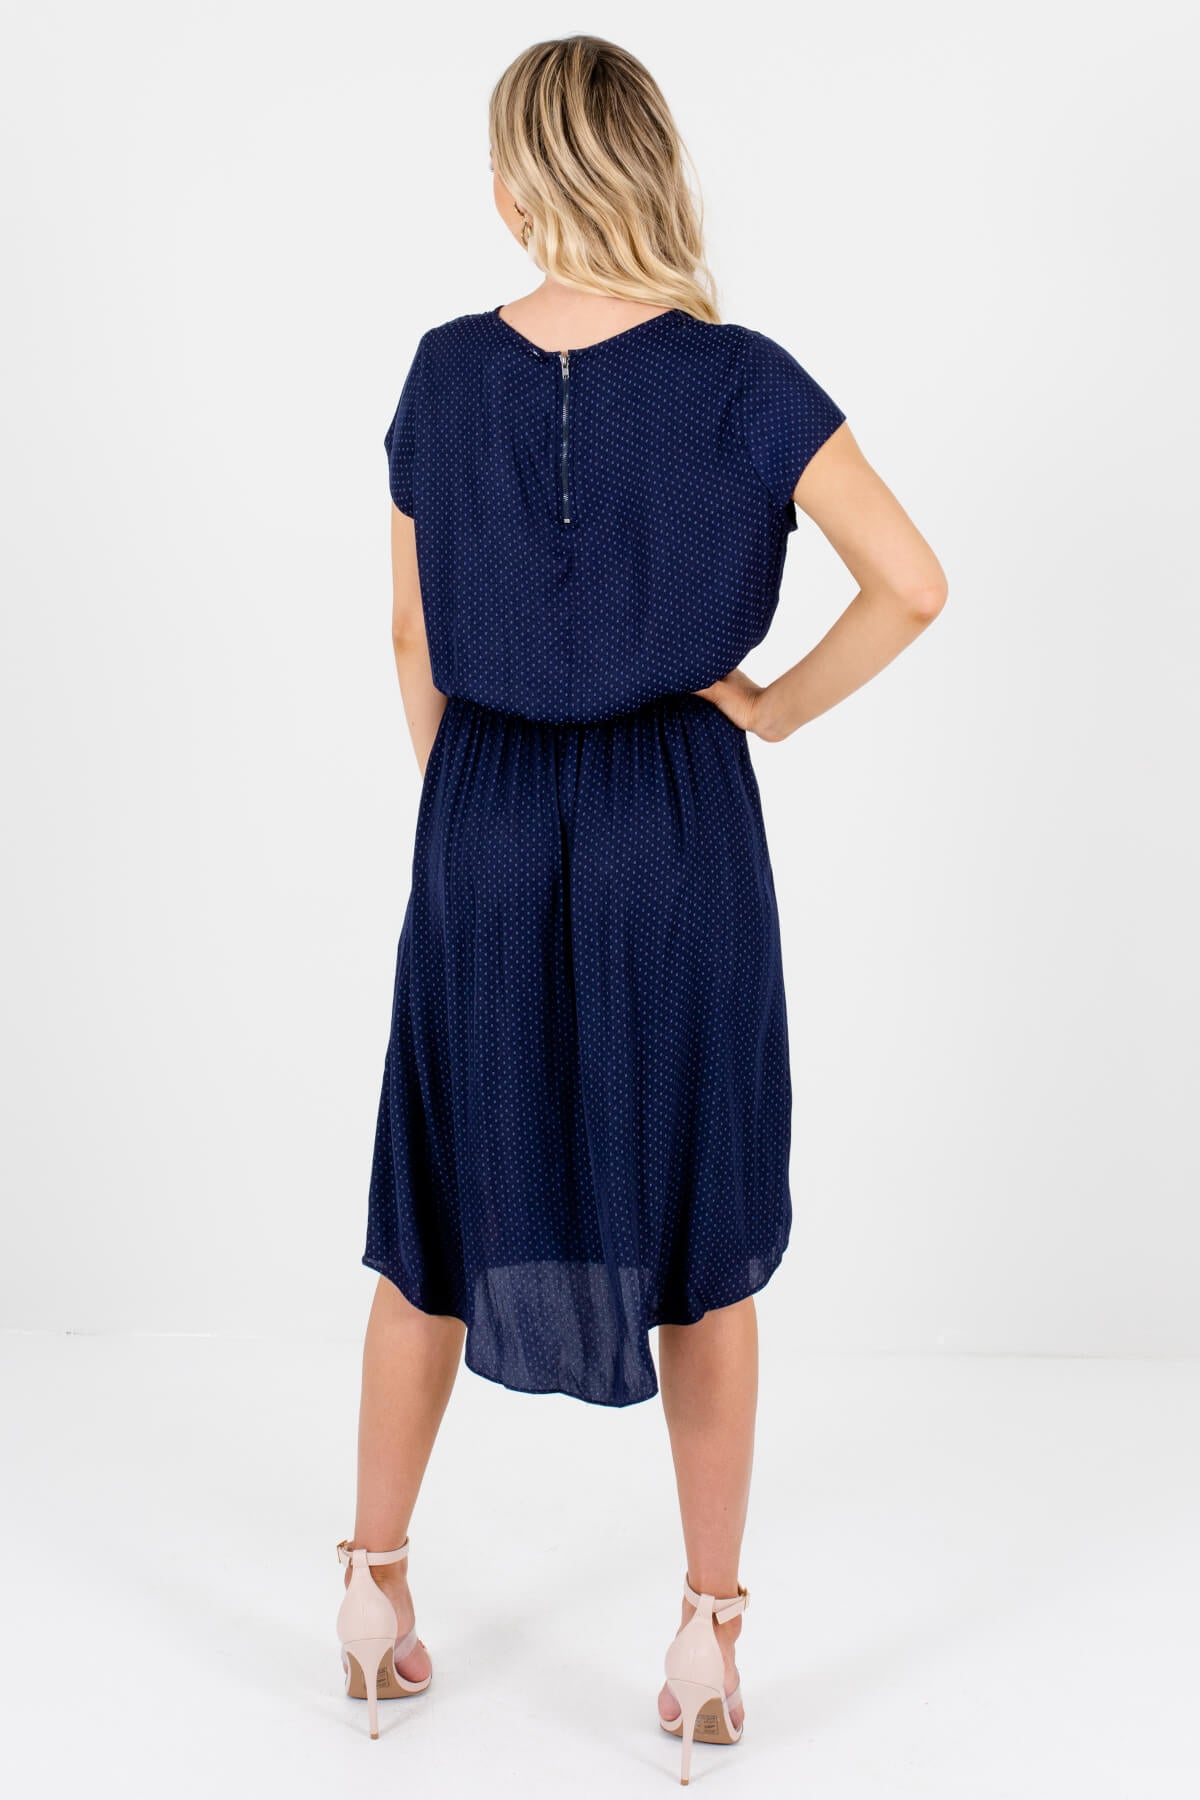 Women's Blue Elastic Waistband Boutique Knee-Length Dresses